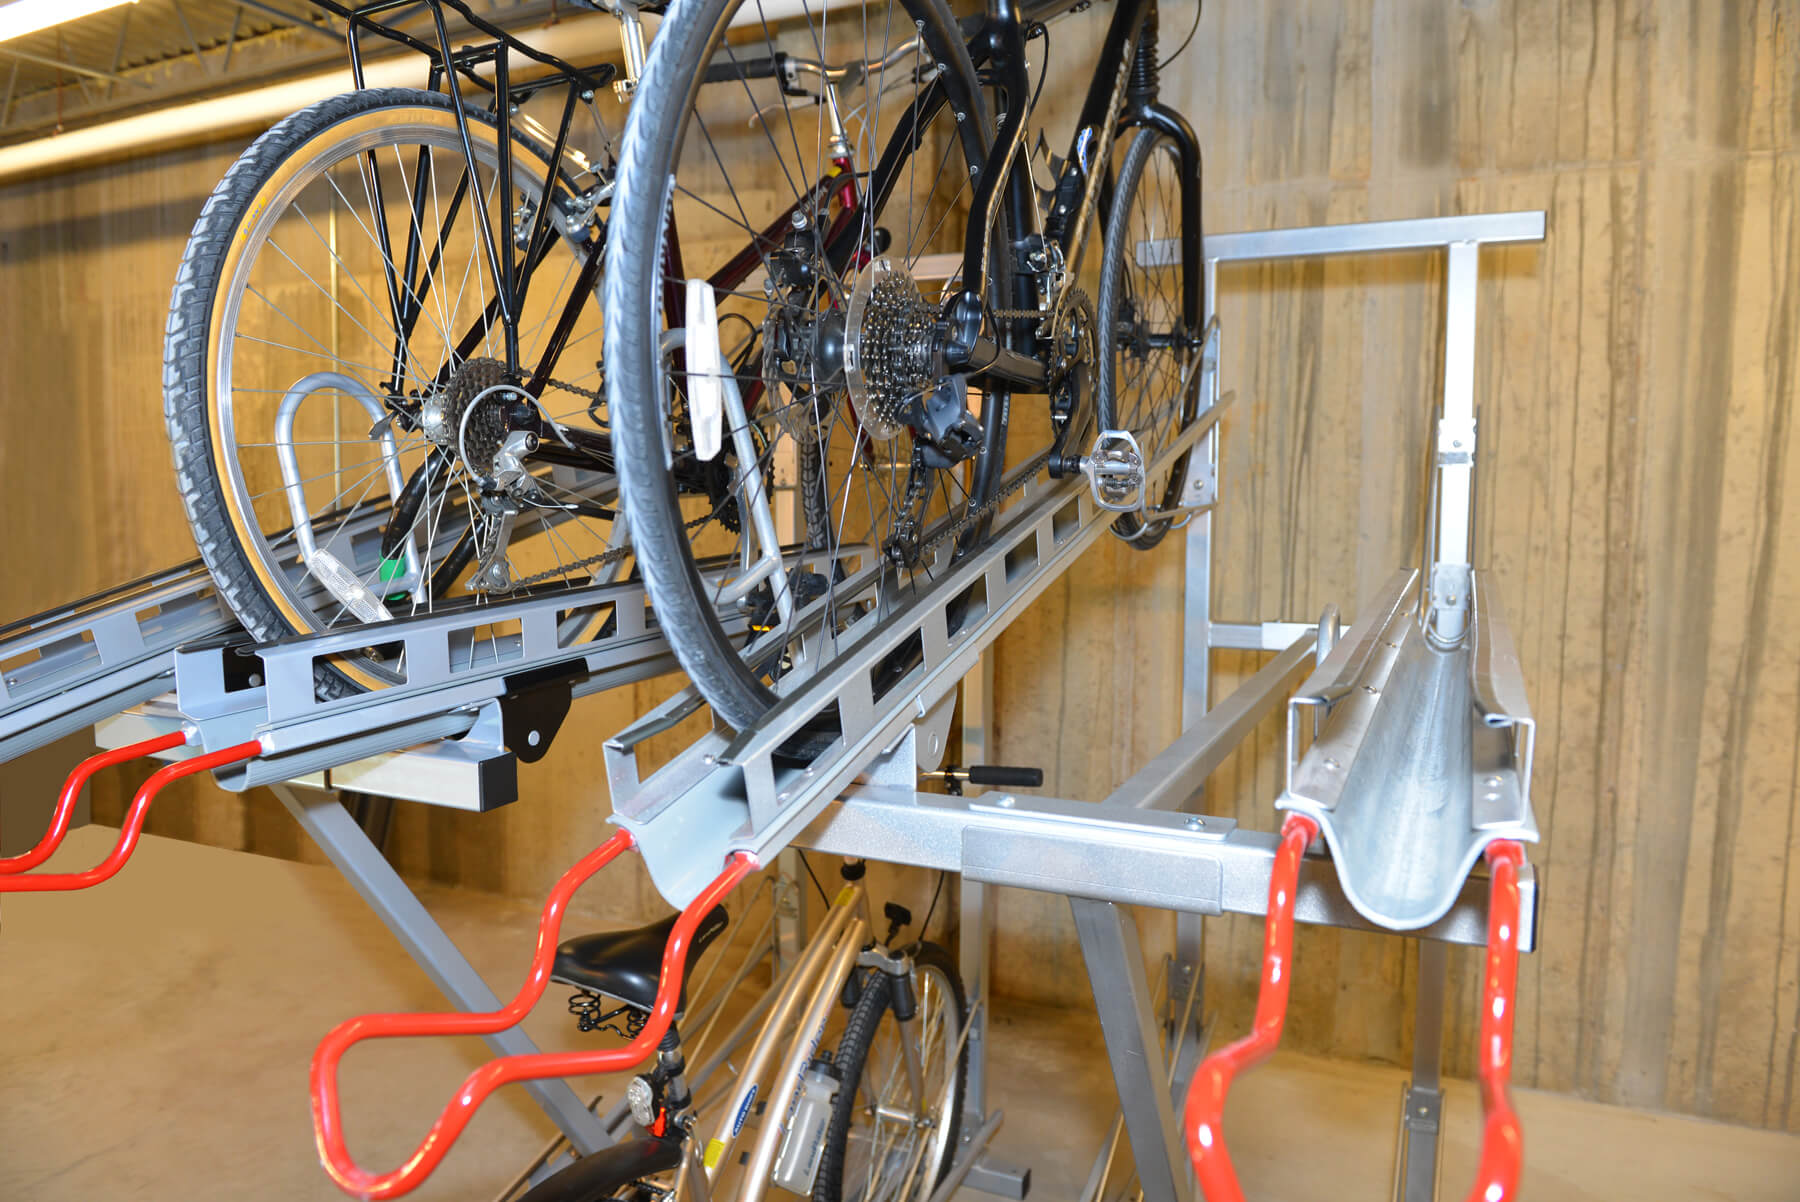 CycleSafe Hi-Density Bike Rack